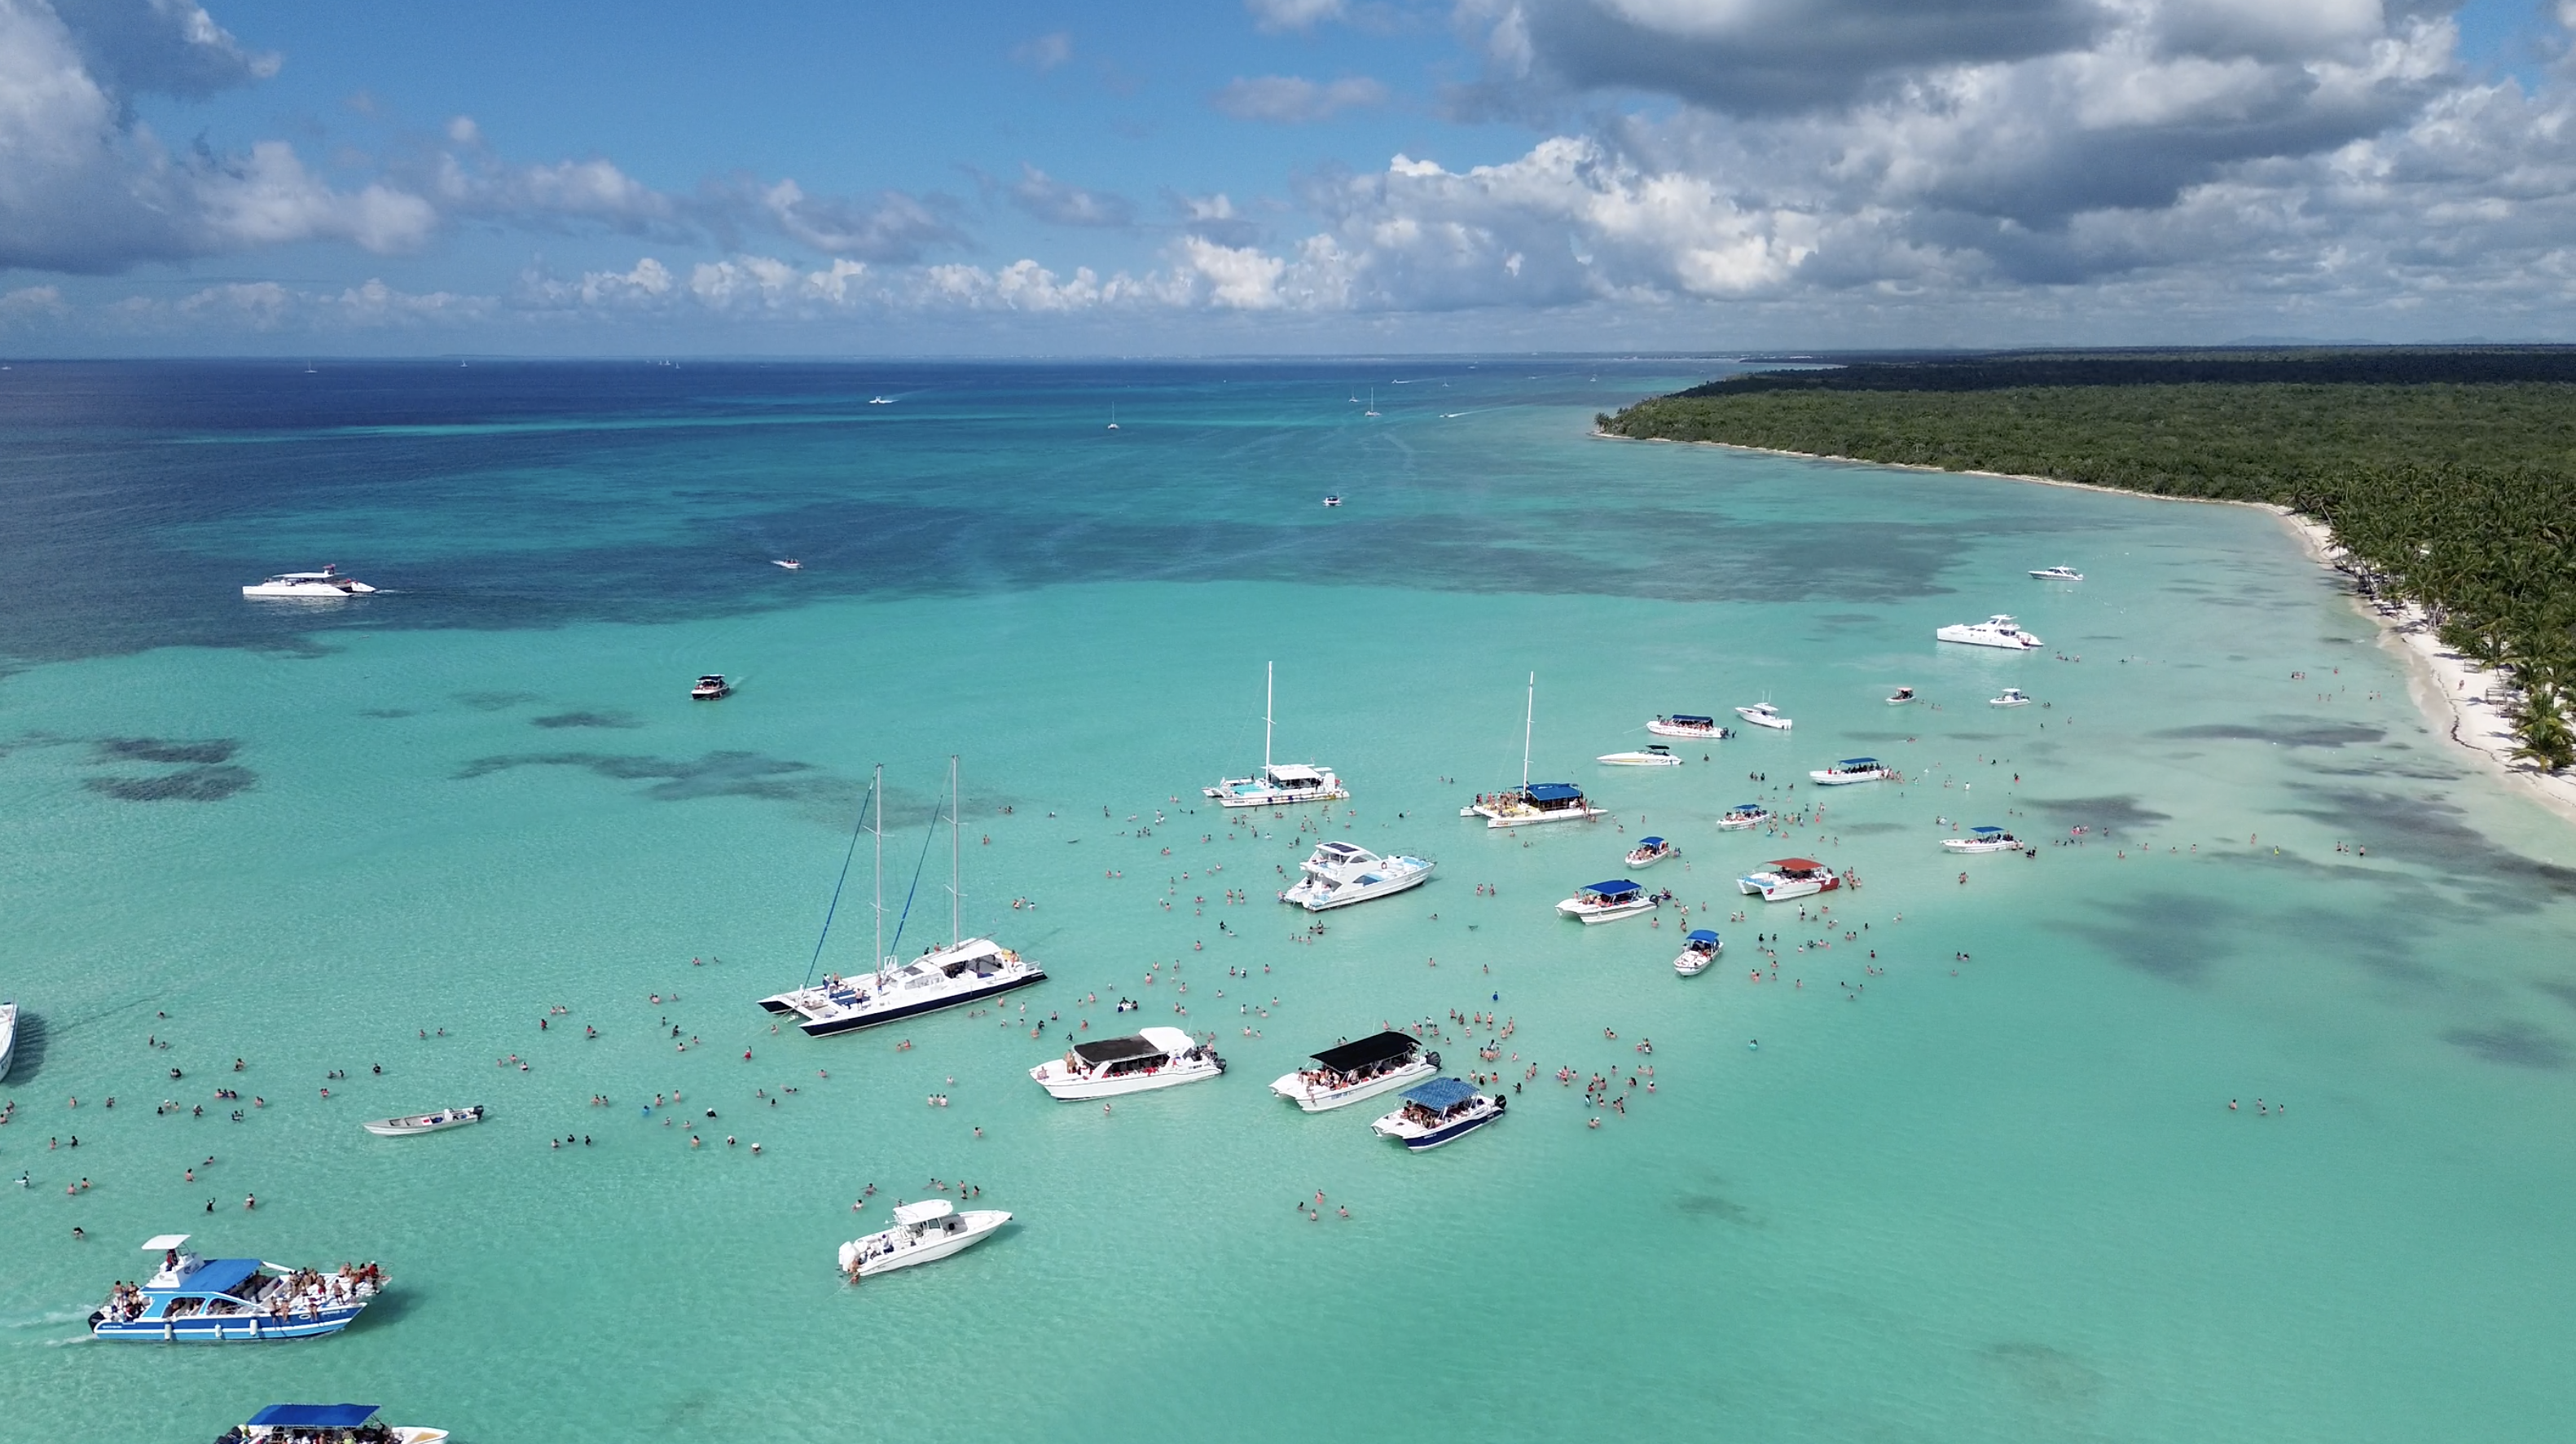 boats in clear blue water near saona island in the dominican republic